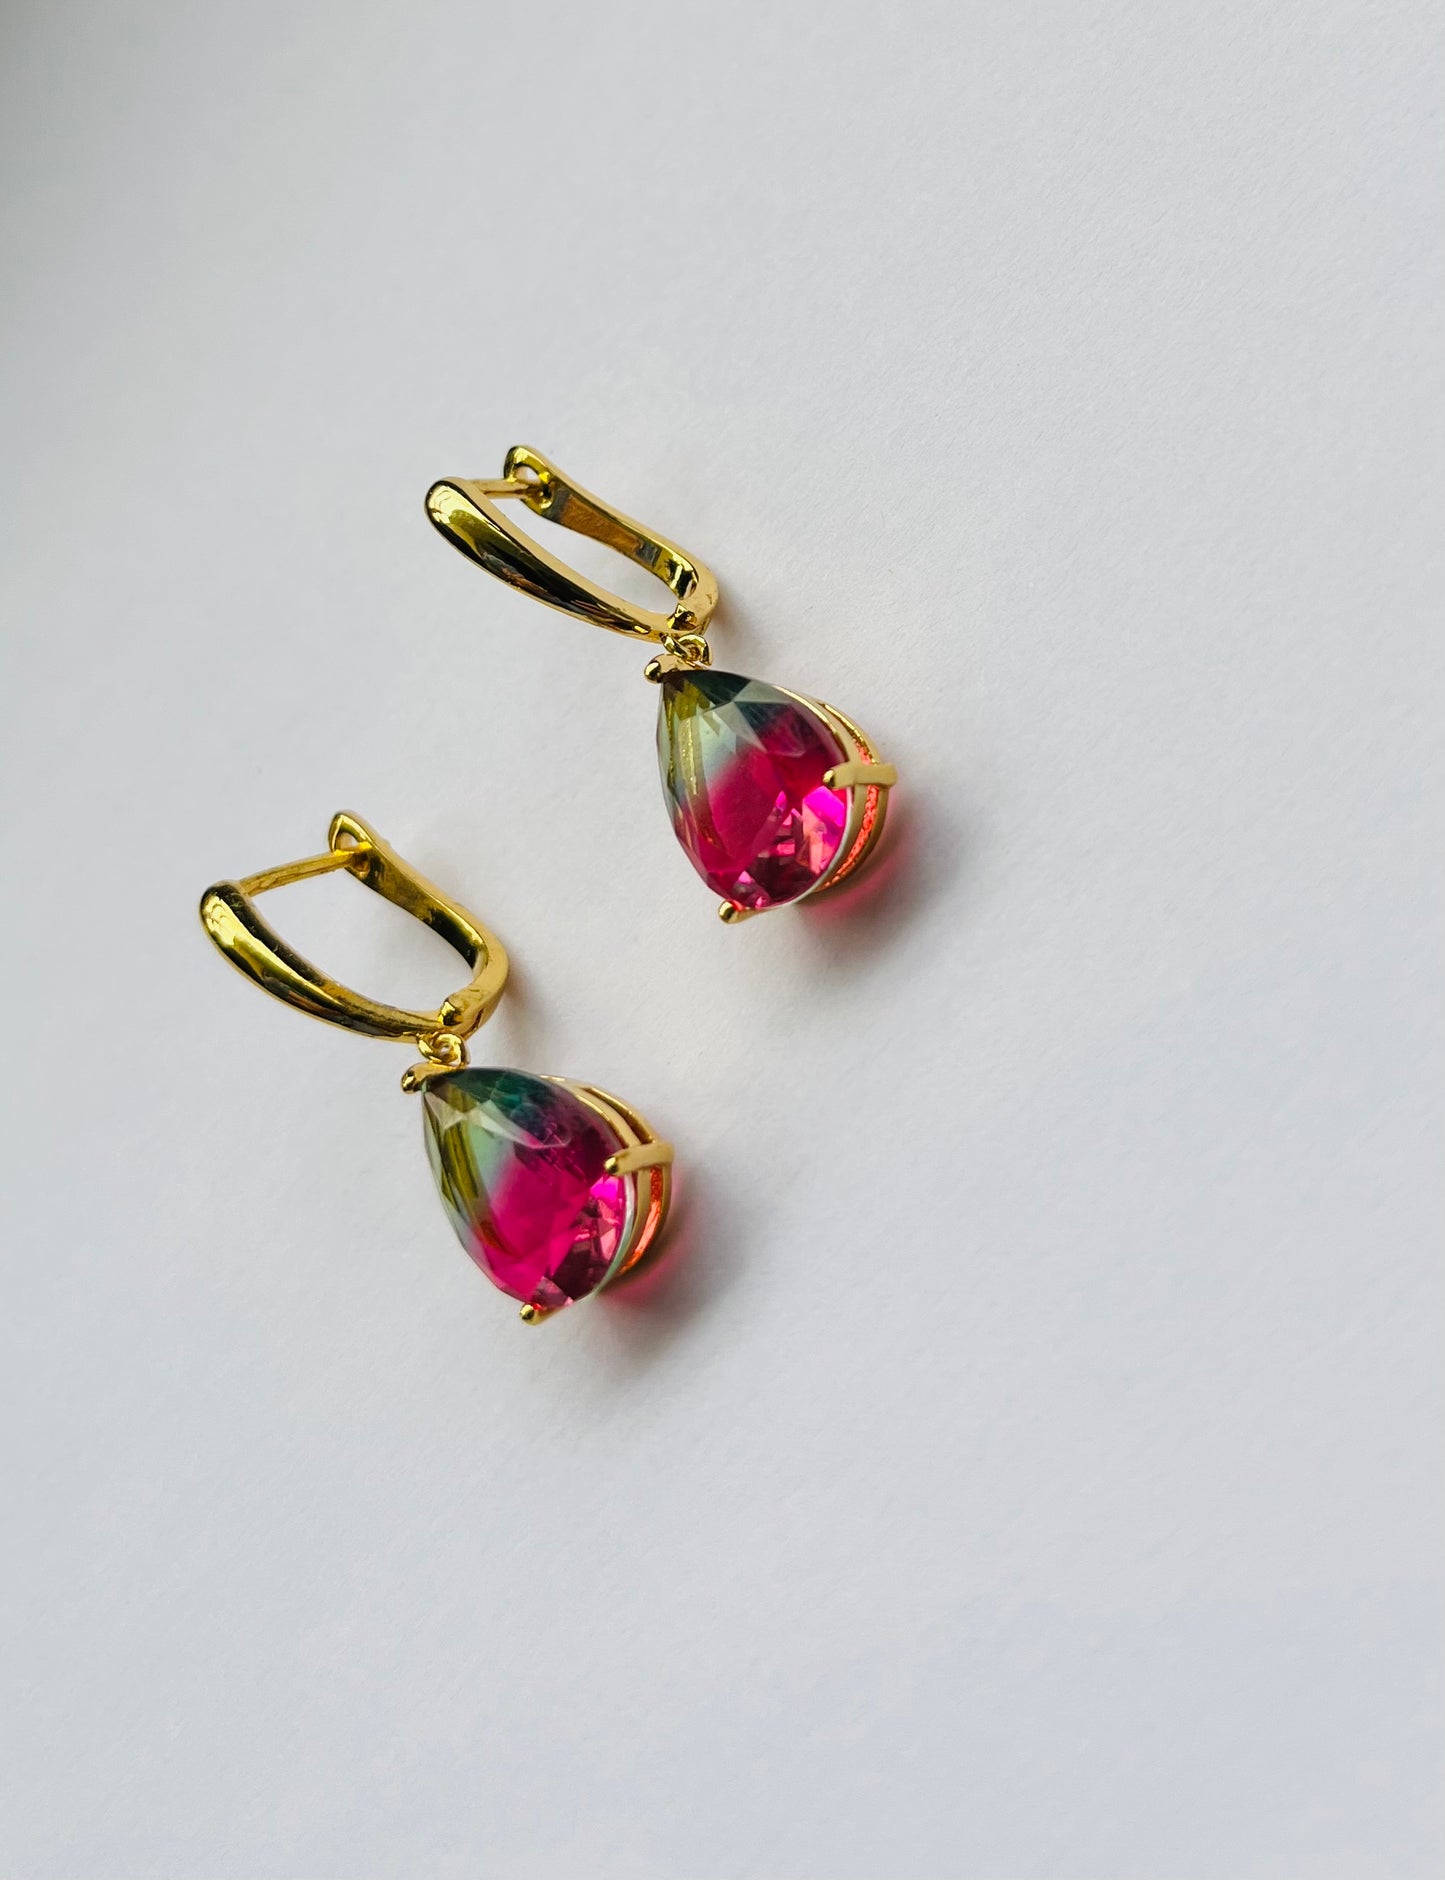 Fuchsia’s green earrings